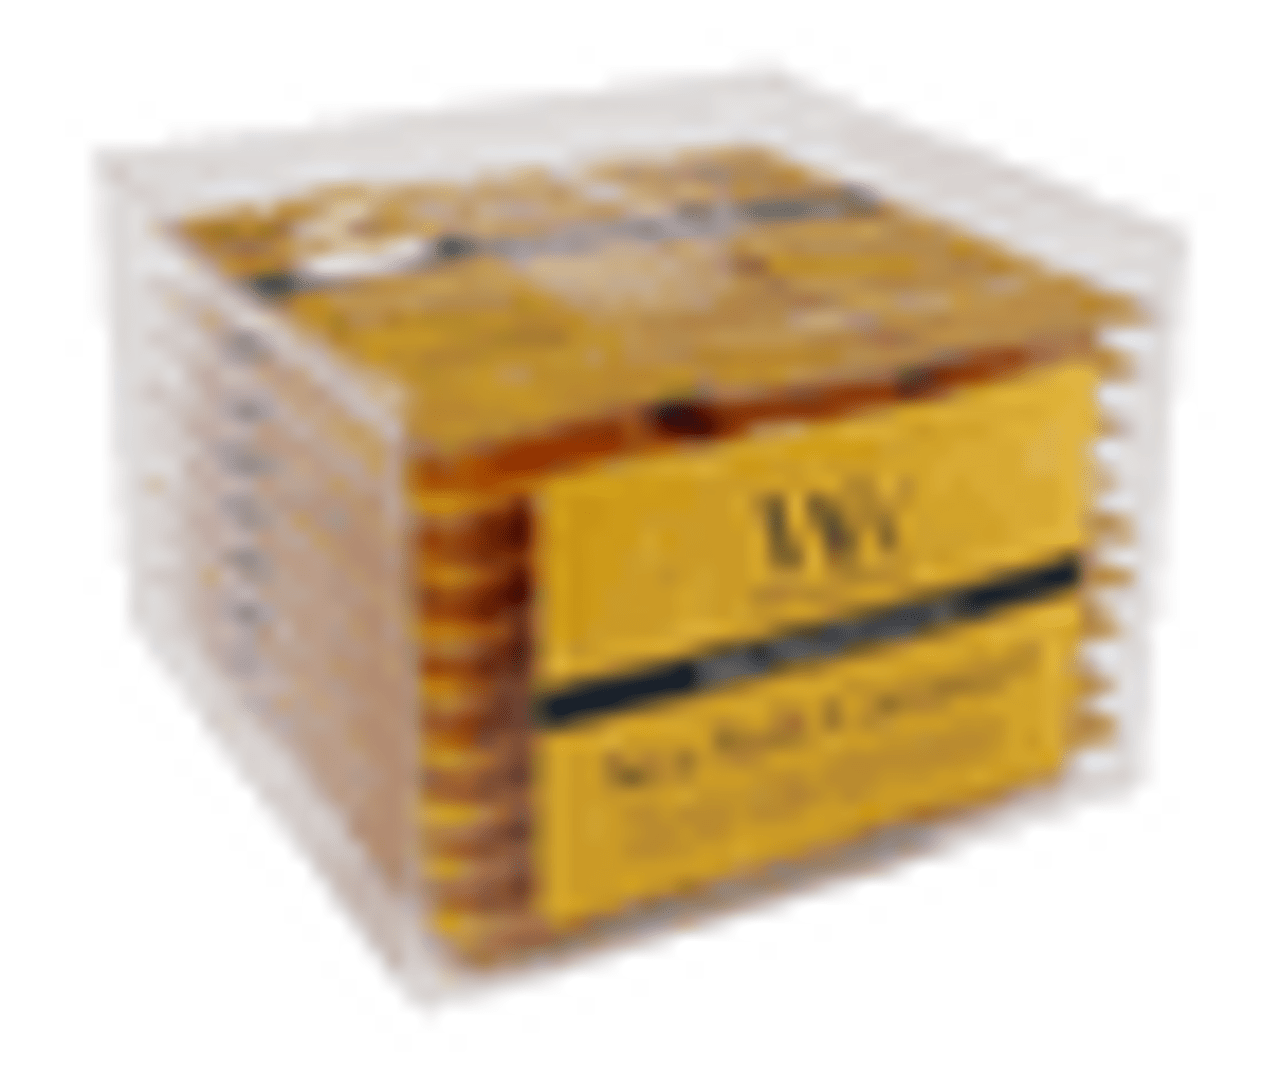 WOODWICK MINI 0.8 oz HOURGLASS WAX MELTS USE